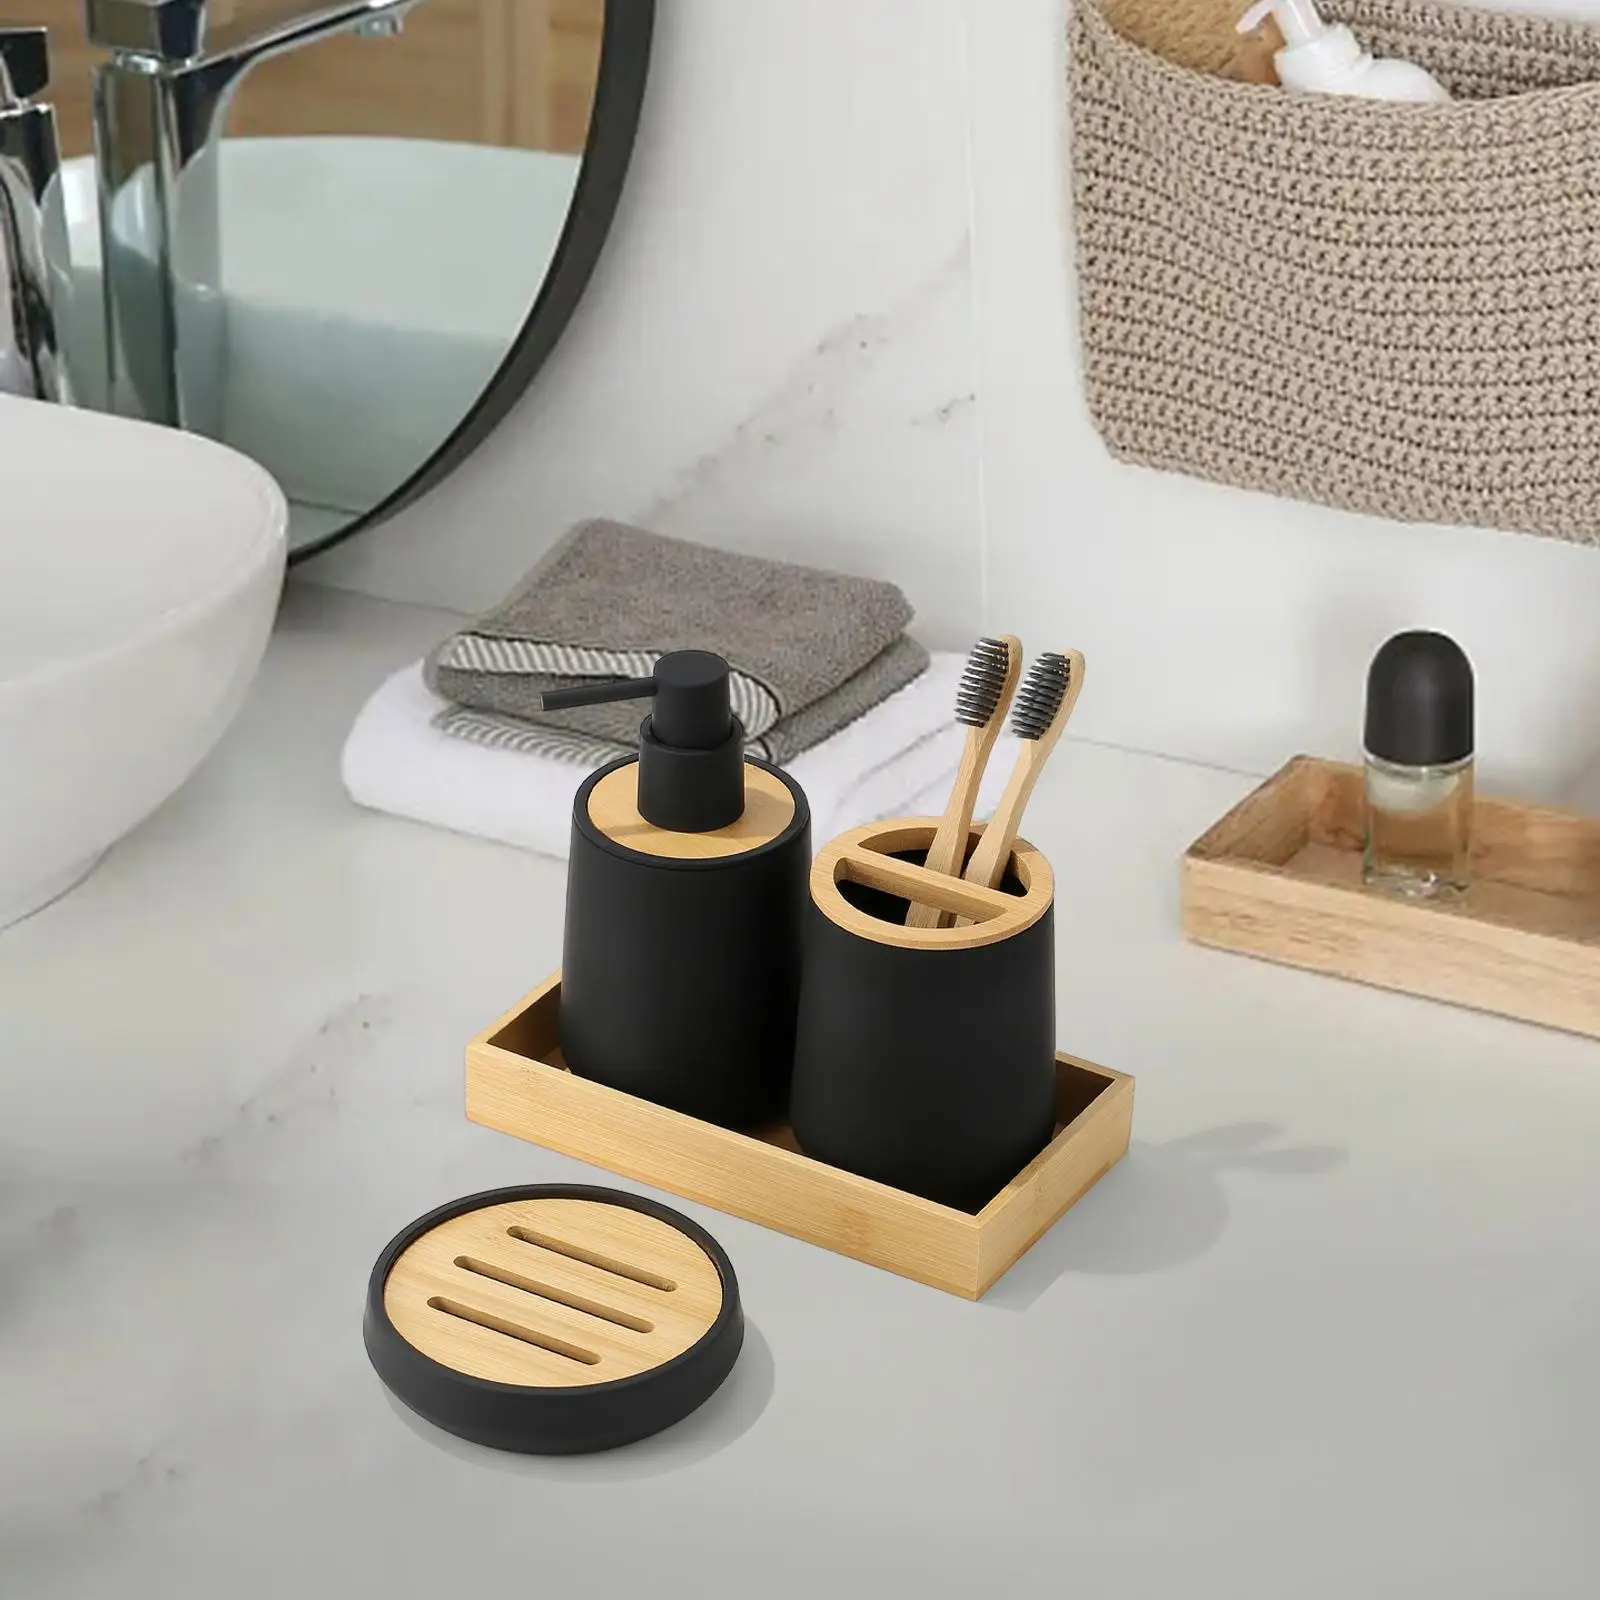 4Pcs Bathroom Accessories Set Vanity Decor for Homes, Office Stylish Design